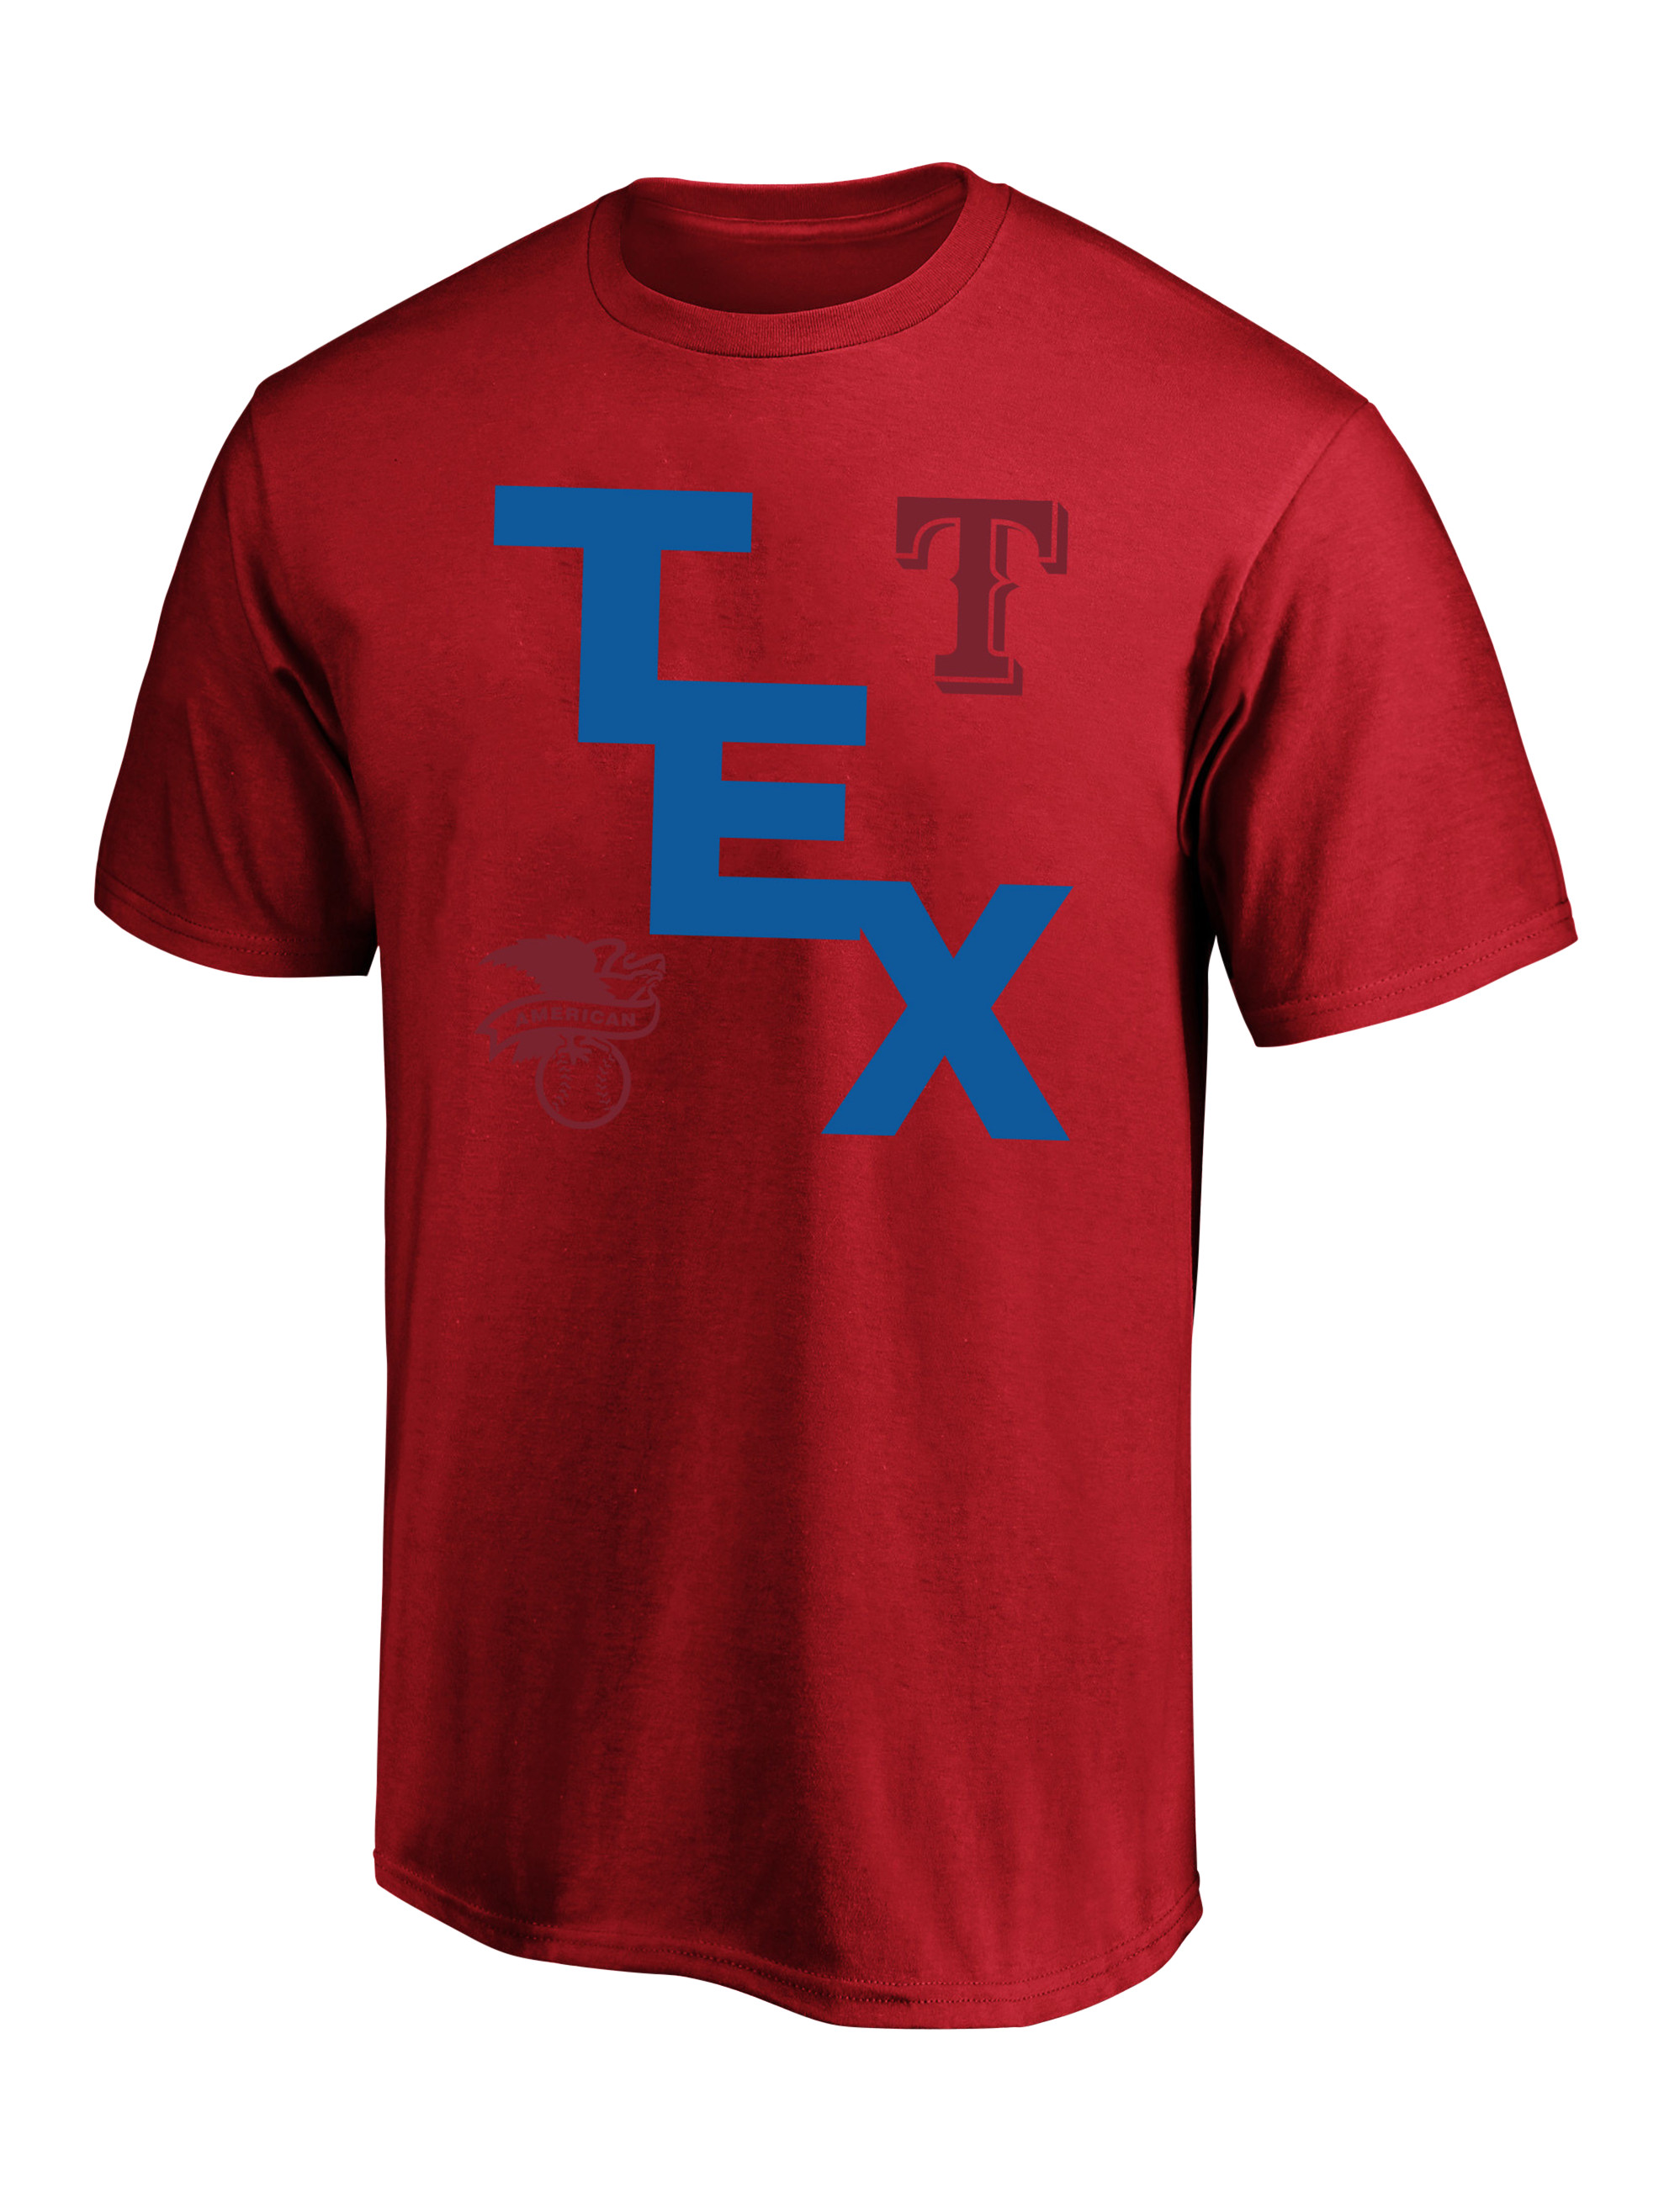 Texas Rangers Light Blue Coop Logo Long Sleeve Fashion T Shirt